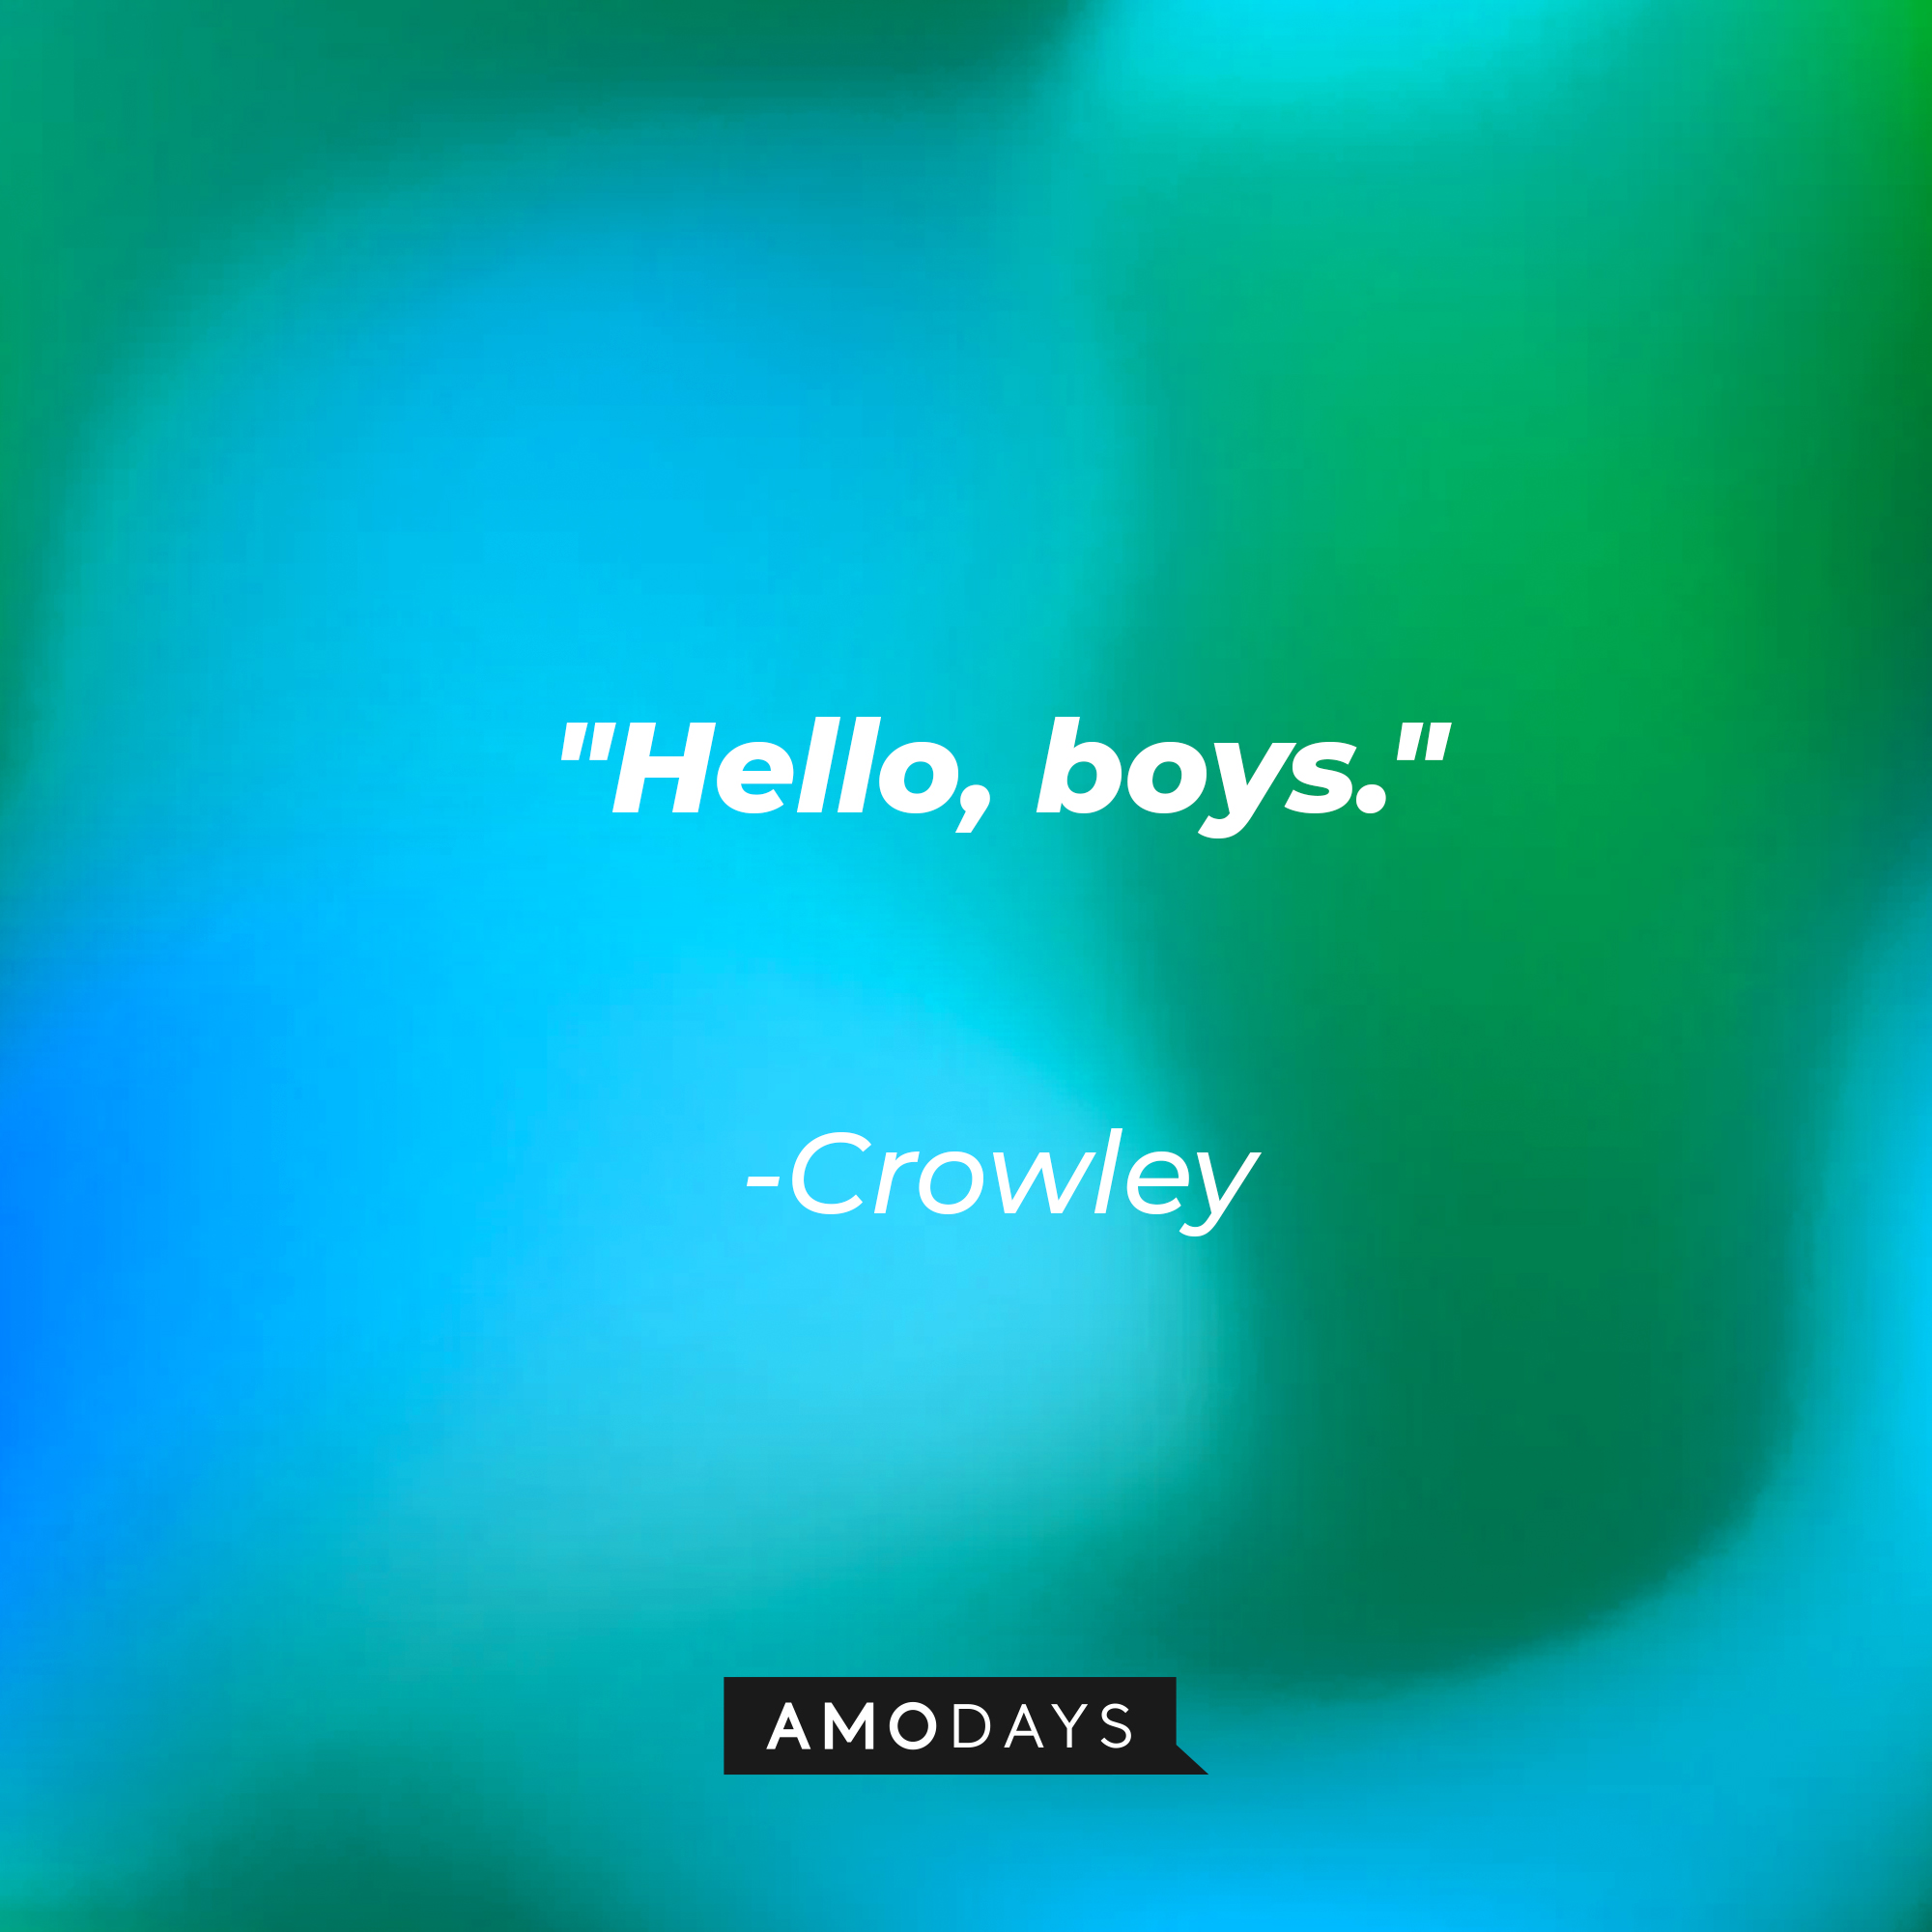 Crowley’s quote “Hello, boys.” | Source: AmoDays